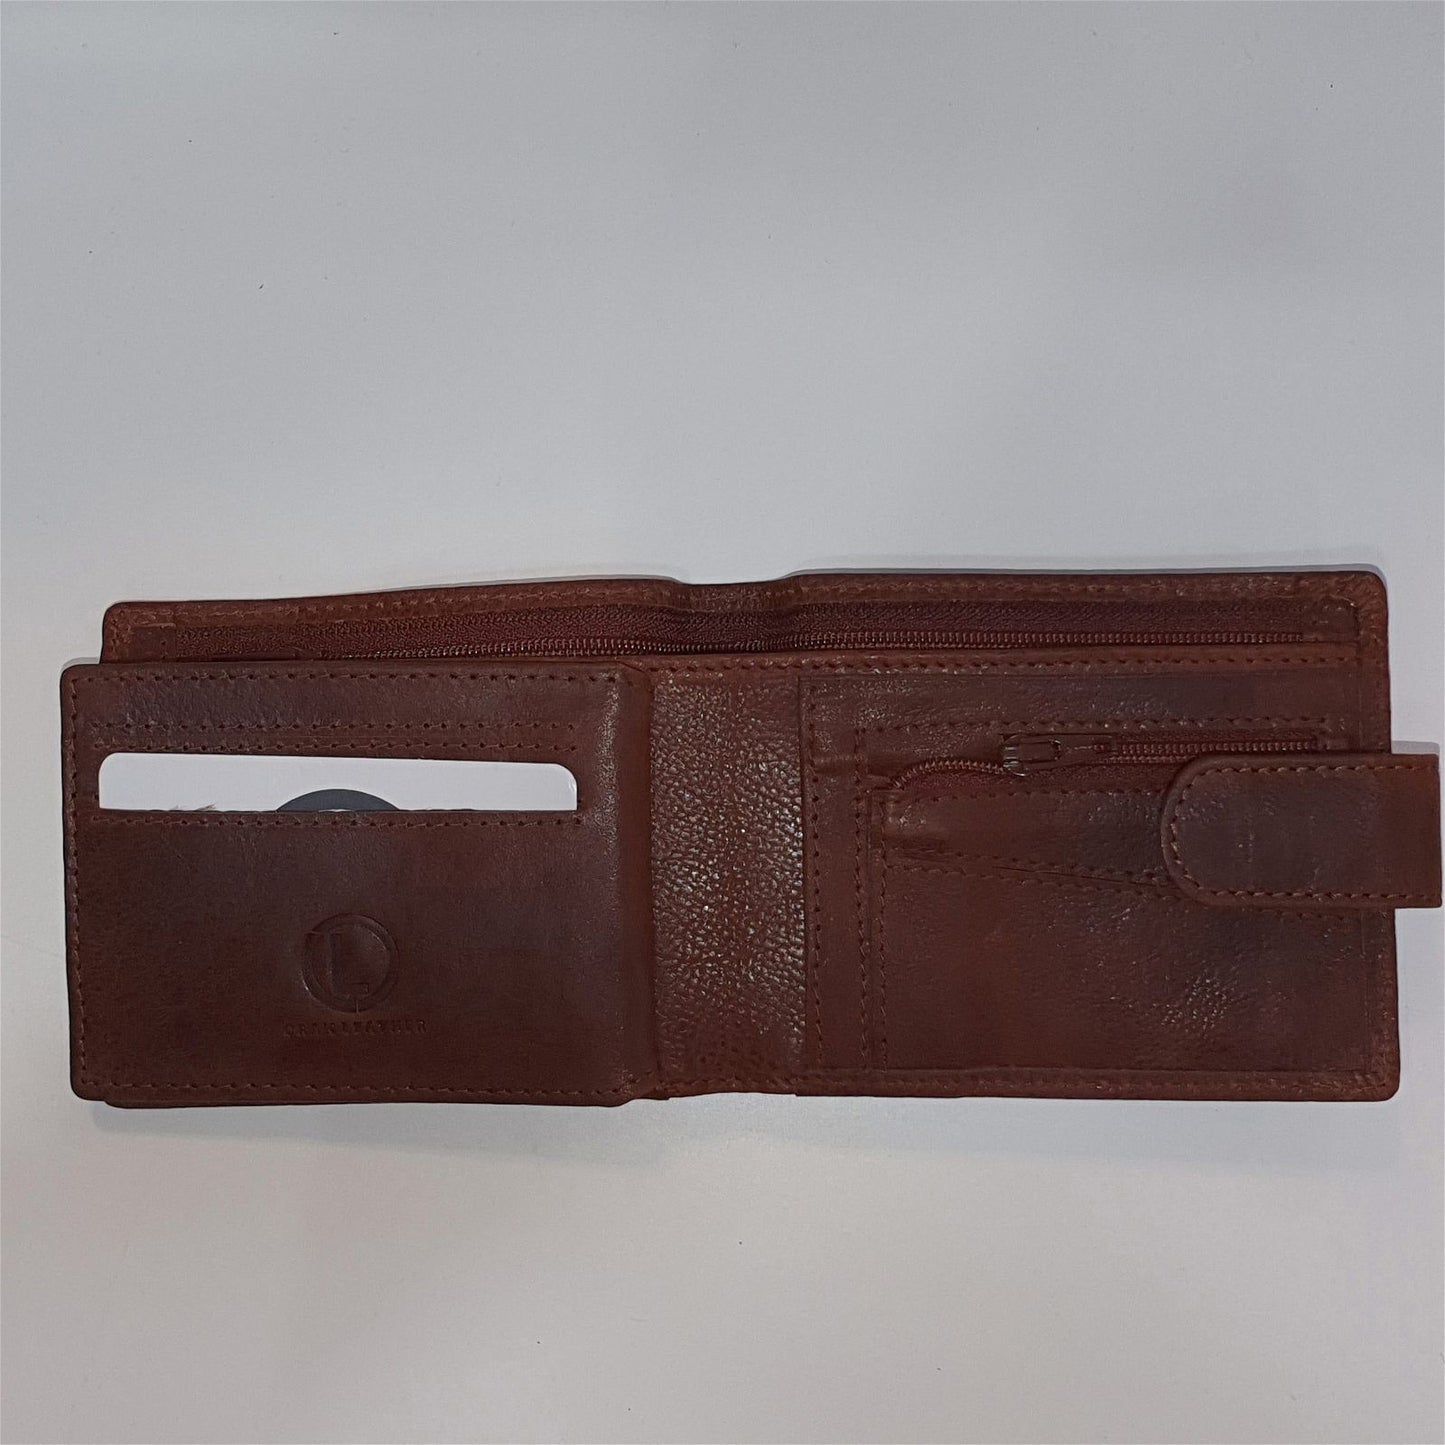 Oran Clove Mens Leather Wallet BK-99 - rainbowbags